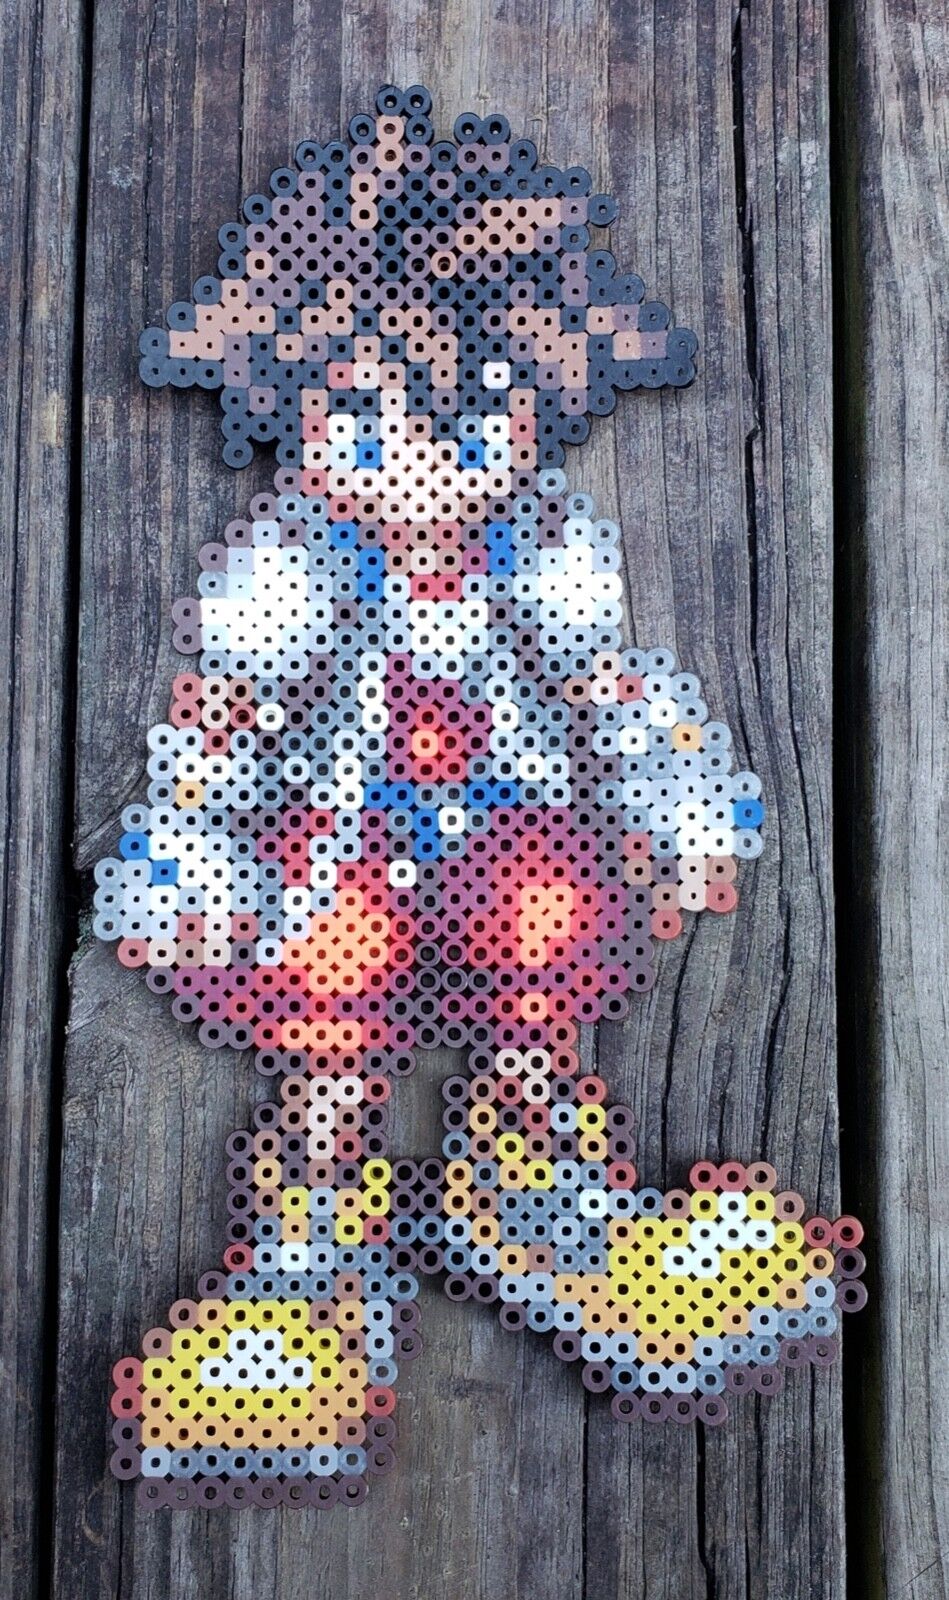 Sora Kingdom Hearts Pixel Art Bead Perler Sale special price service